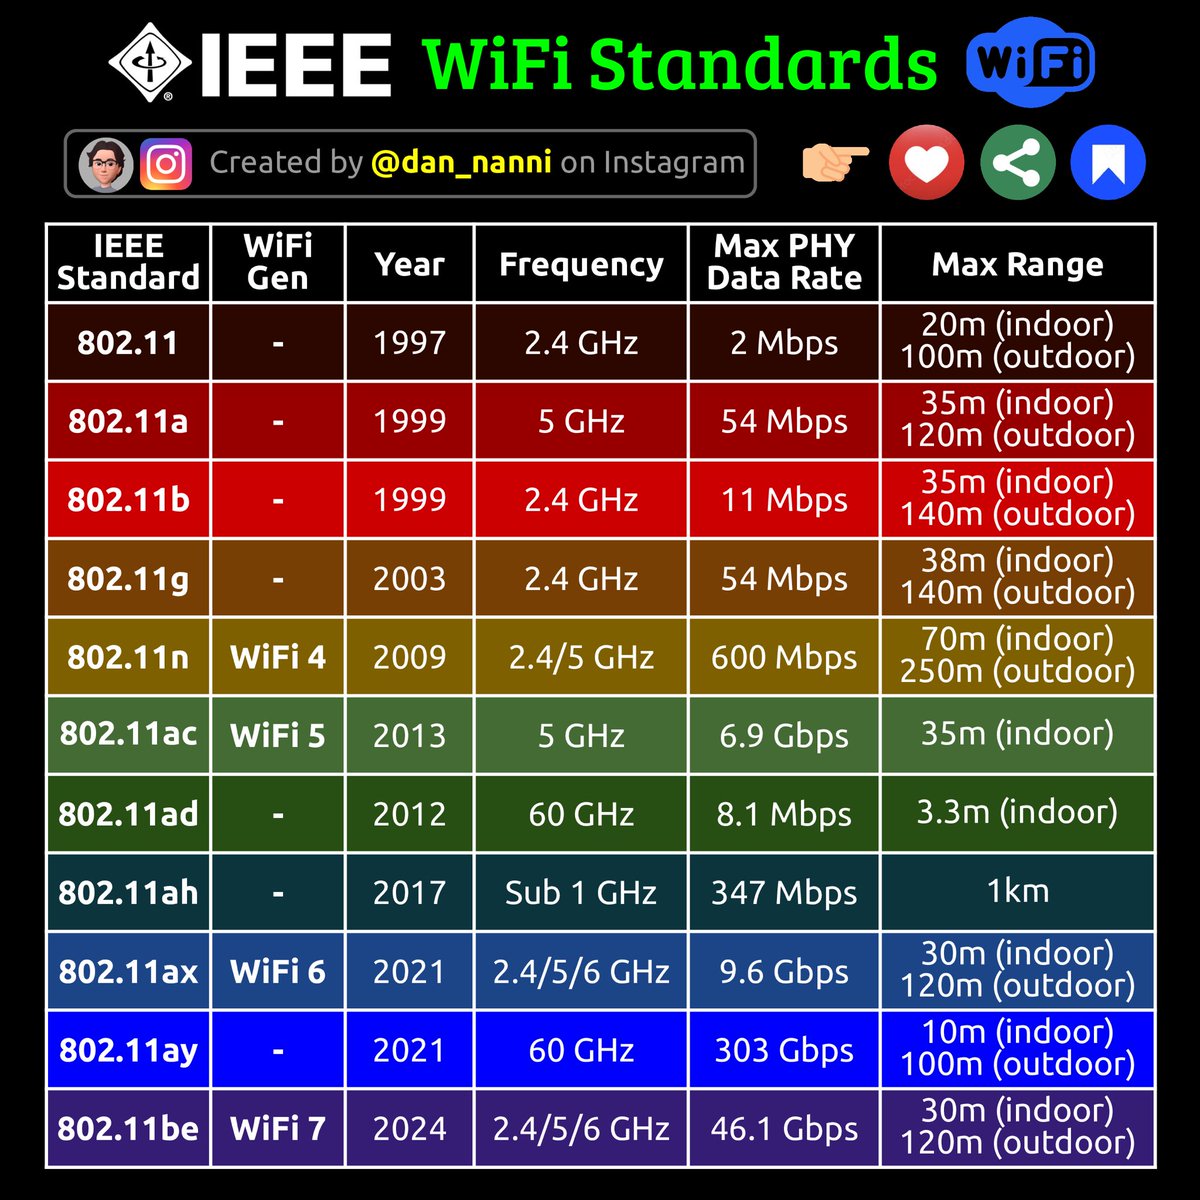 IEEE Wifi Standards

Credit @xmodulo 

#infosec #cybersecurity #cybersecuritytips #pentesting #redteam #informationsecurity #CyberSec #networking #networksecurity #infosecurity #cyberattacks #security #linux #cybersecurityawareness #bugbounty #bugbountytips